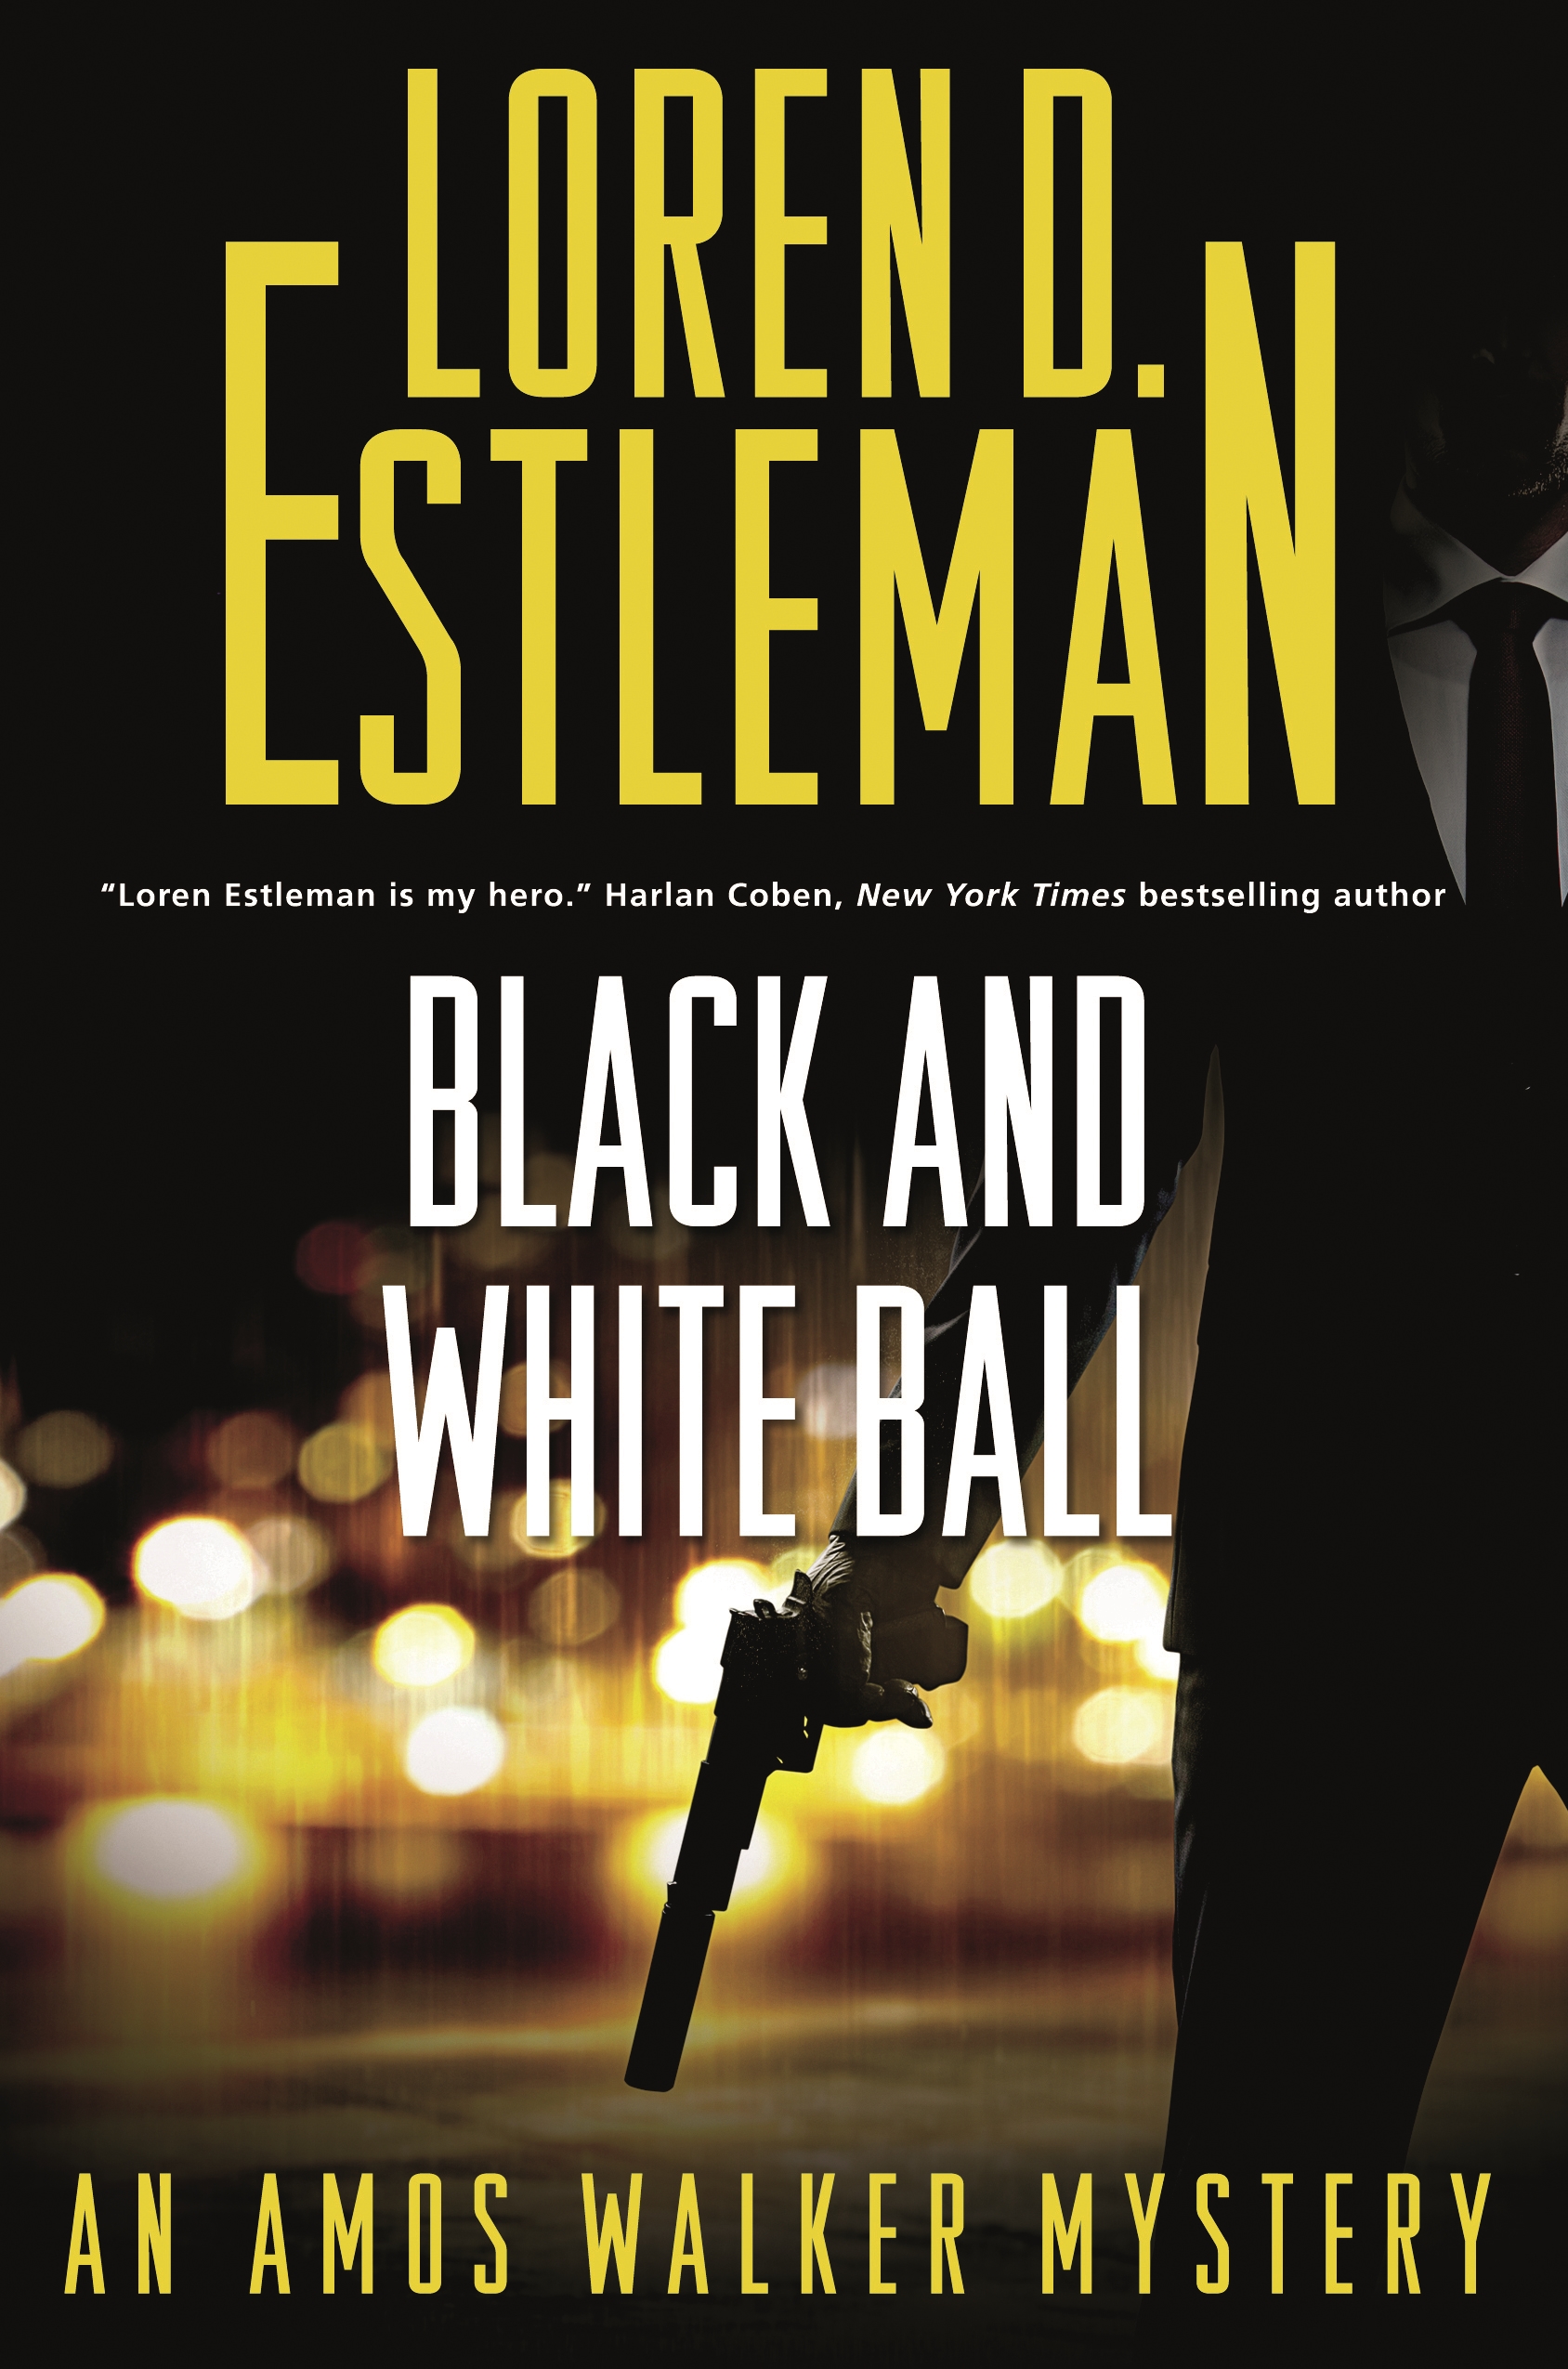 Black and White Ball : An Amos Walker Mystery by Loren D. Estleman